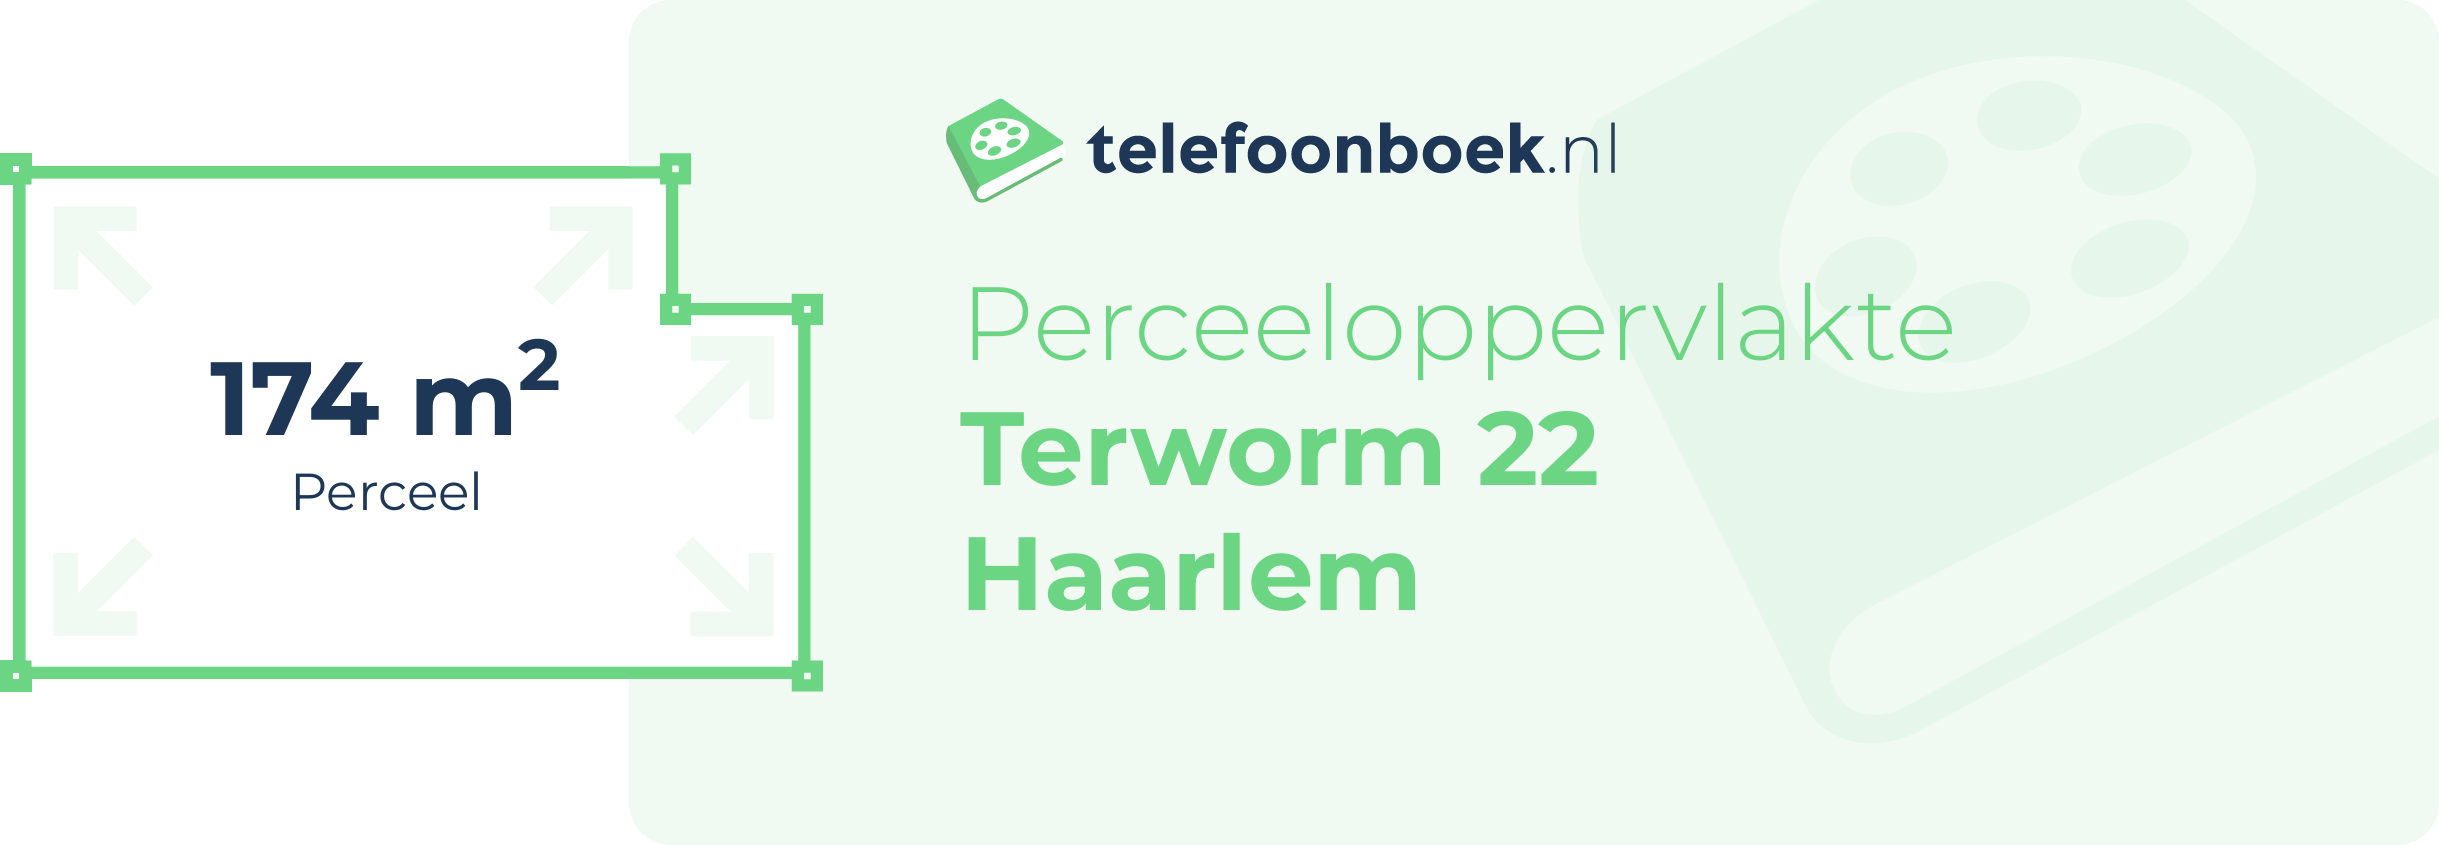 Perceeloppervlakte Terworm 22 Haarlem